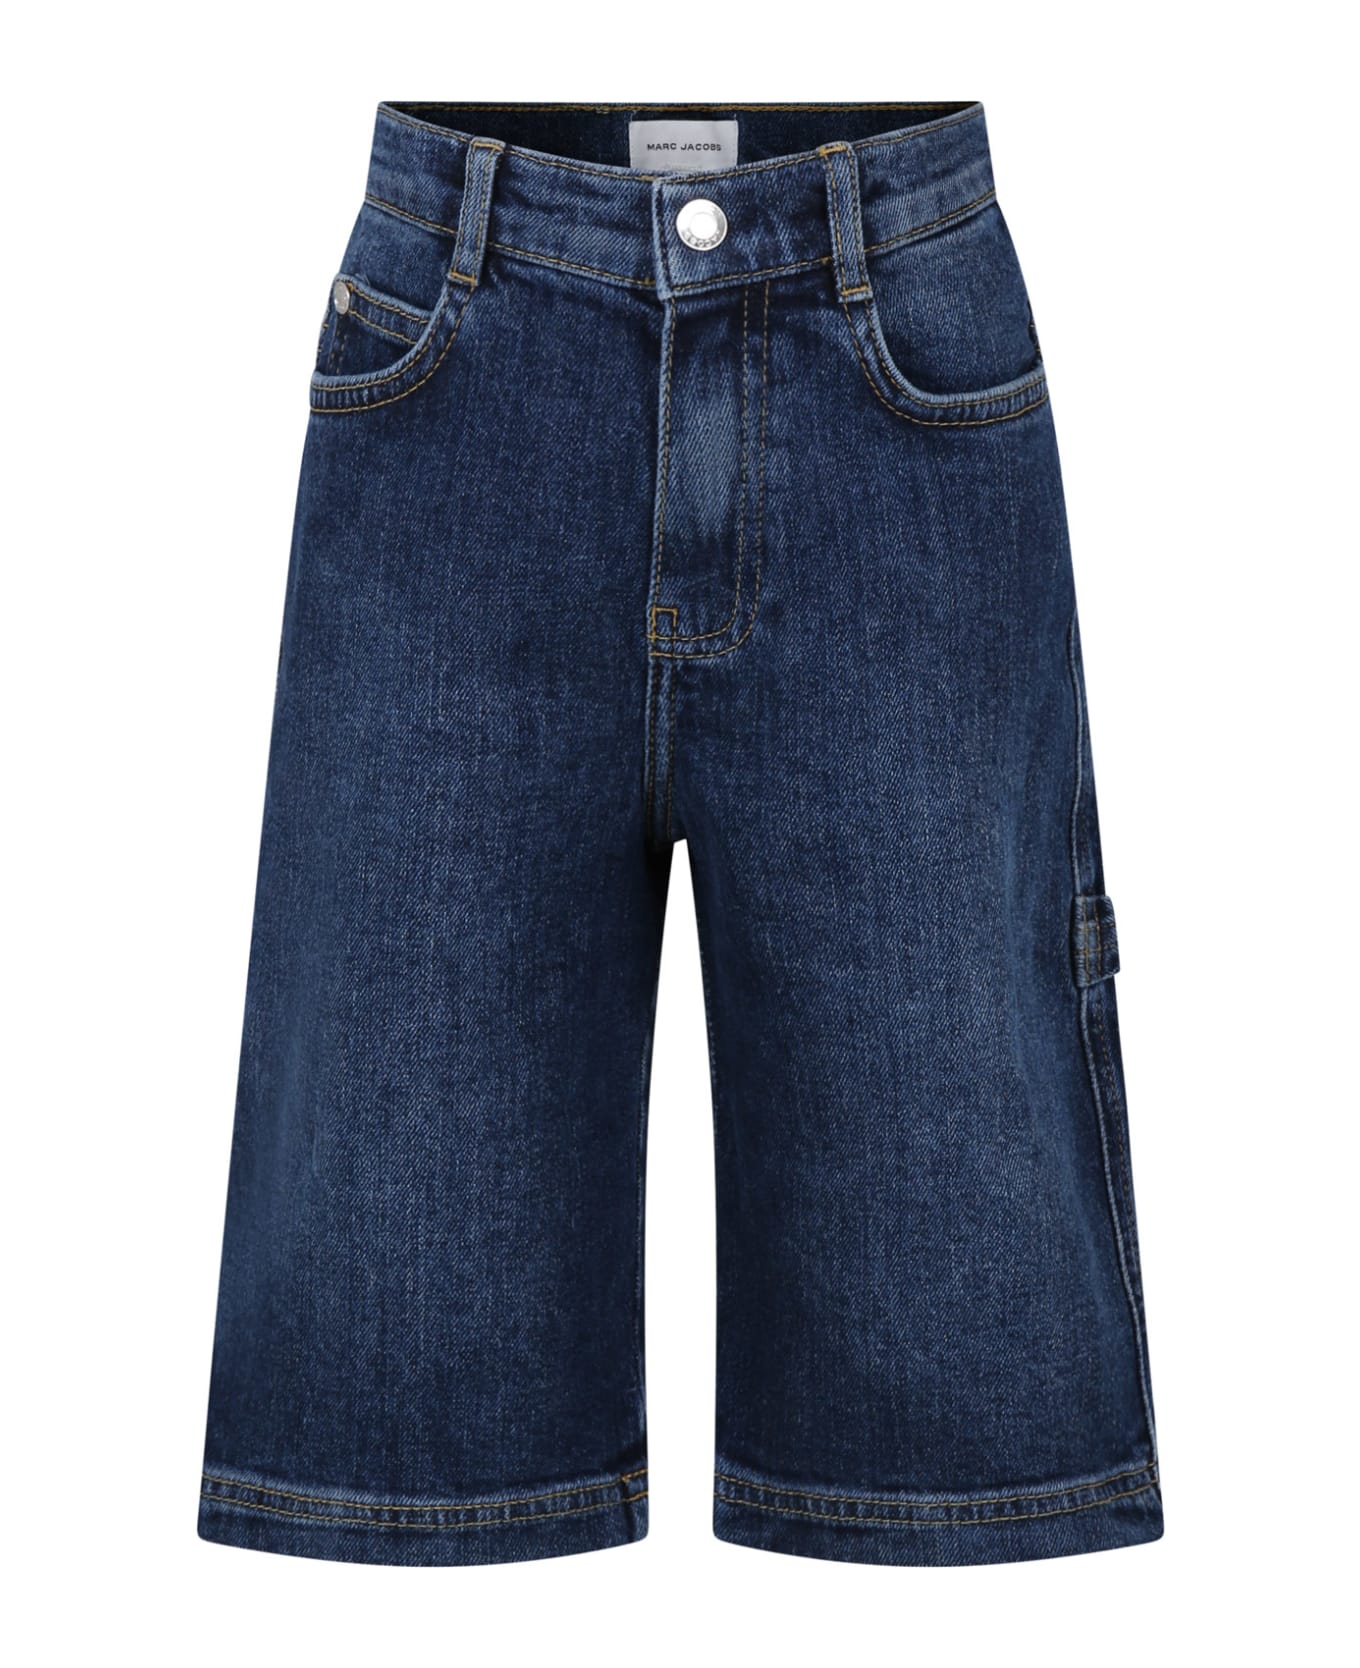 Marc Jacobs Denim Shorts For Boy With Logo - Denim